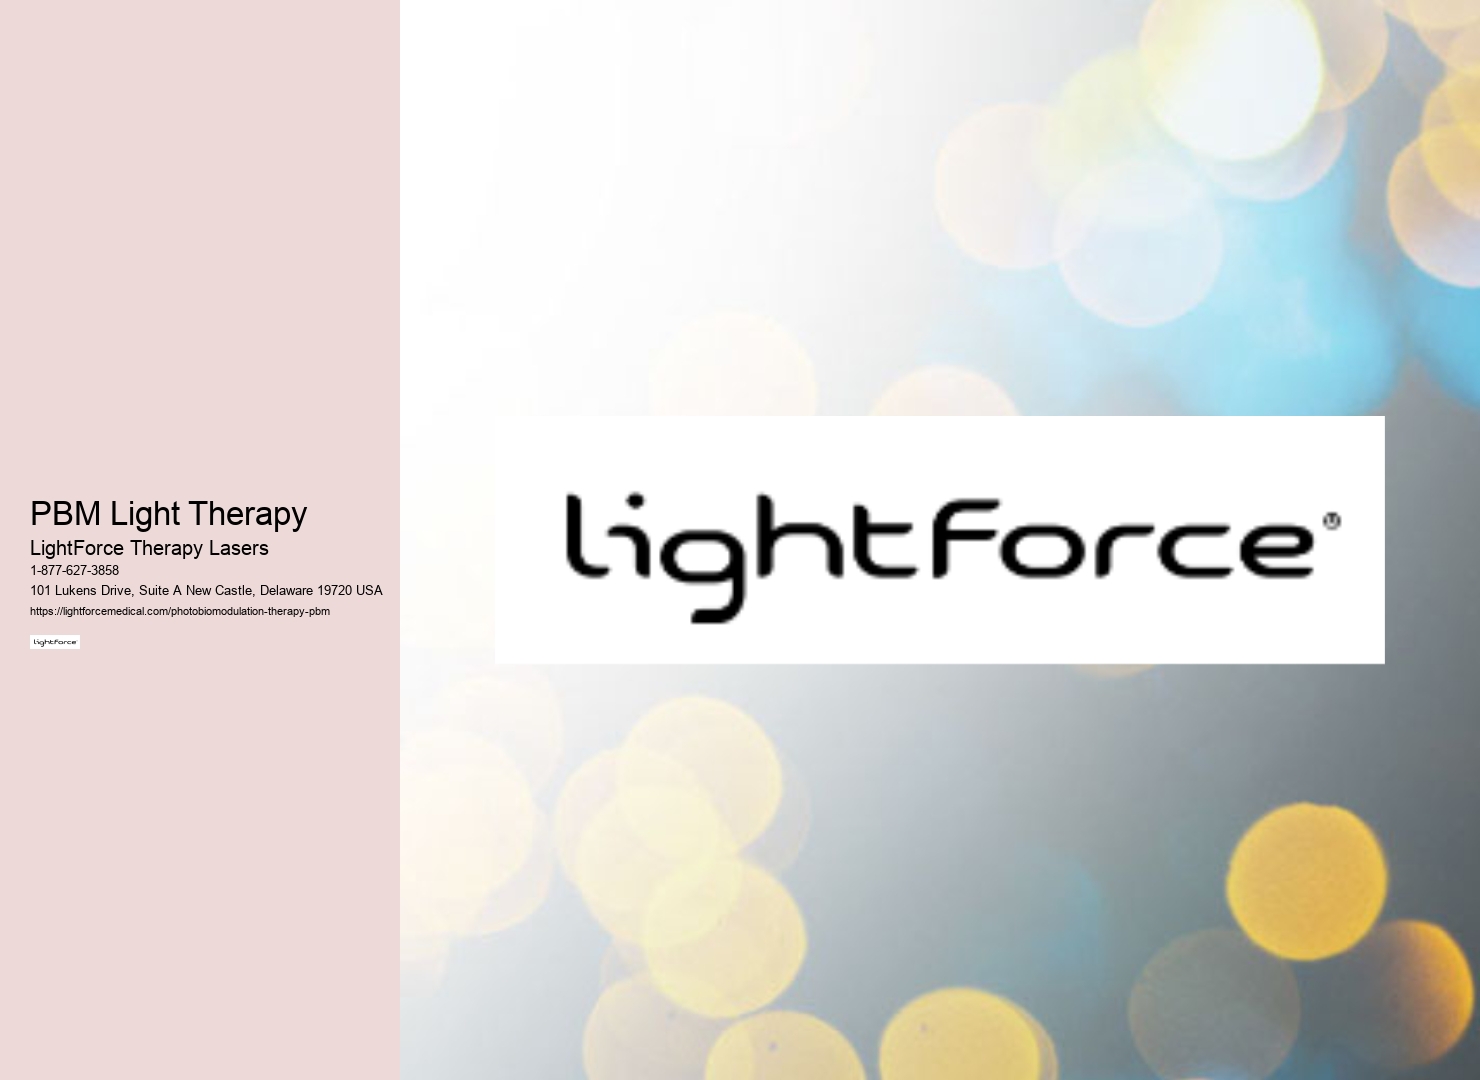 PBM Light Therapy